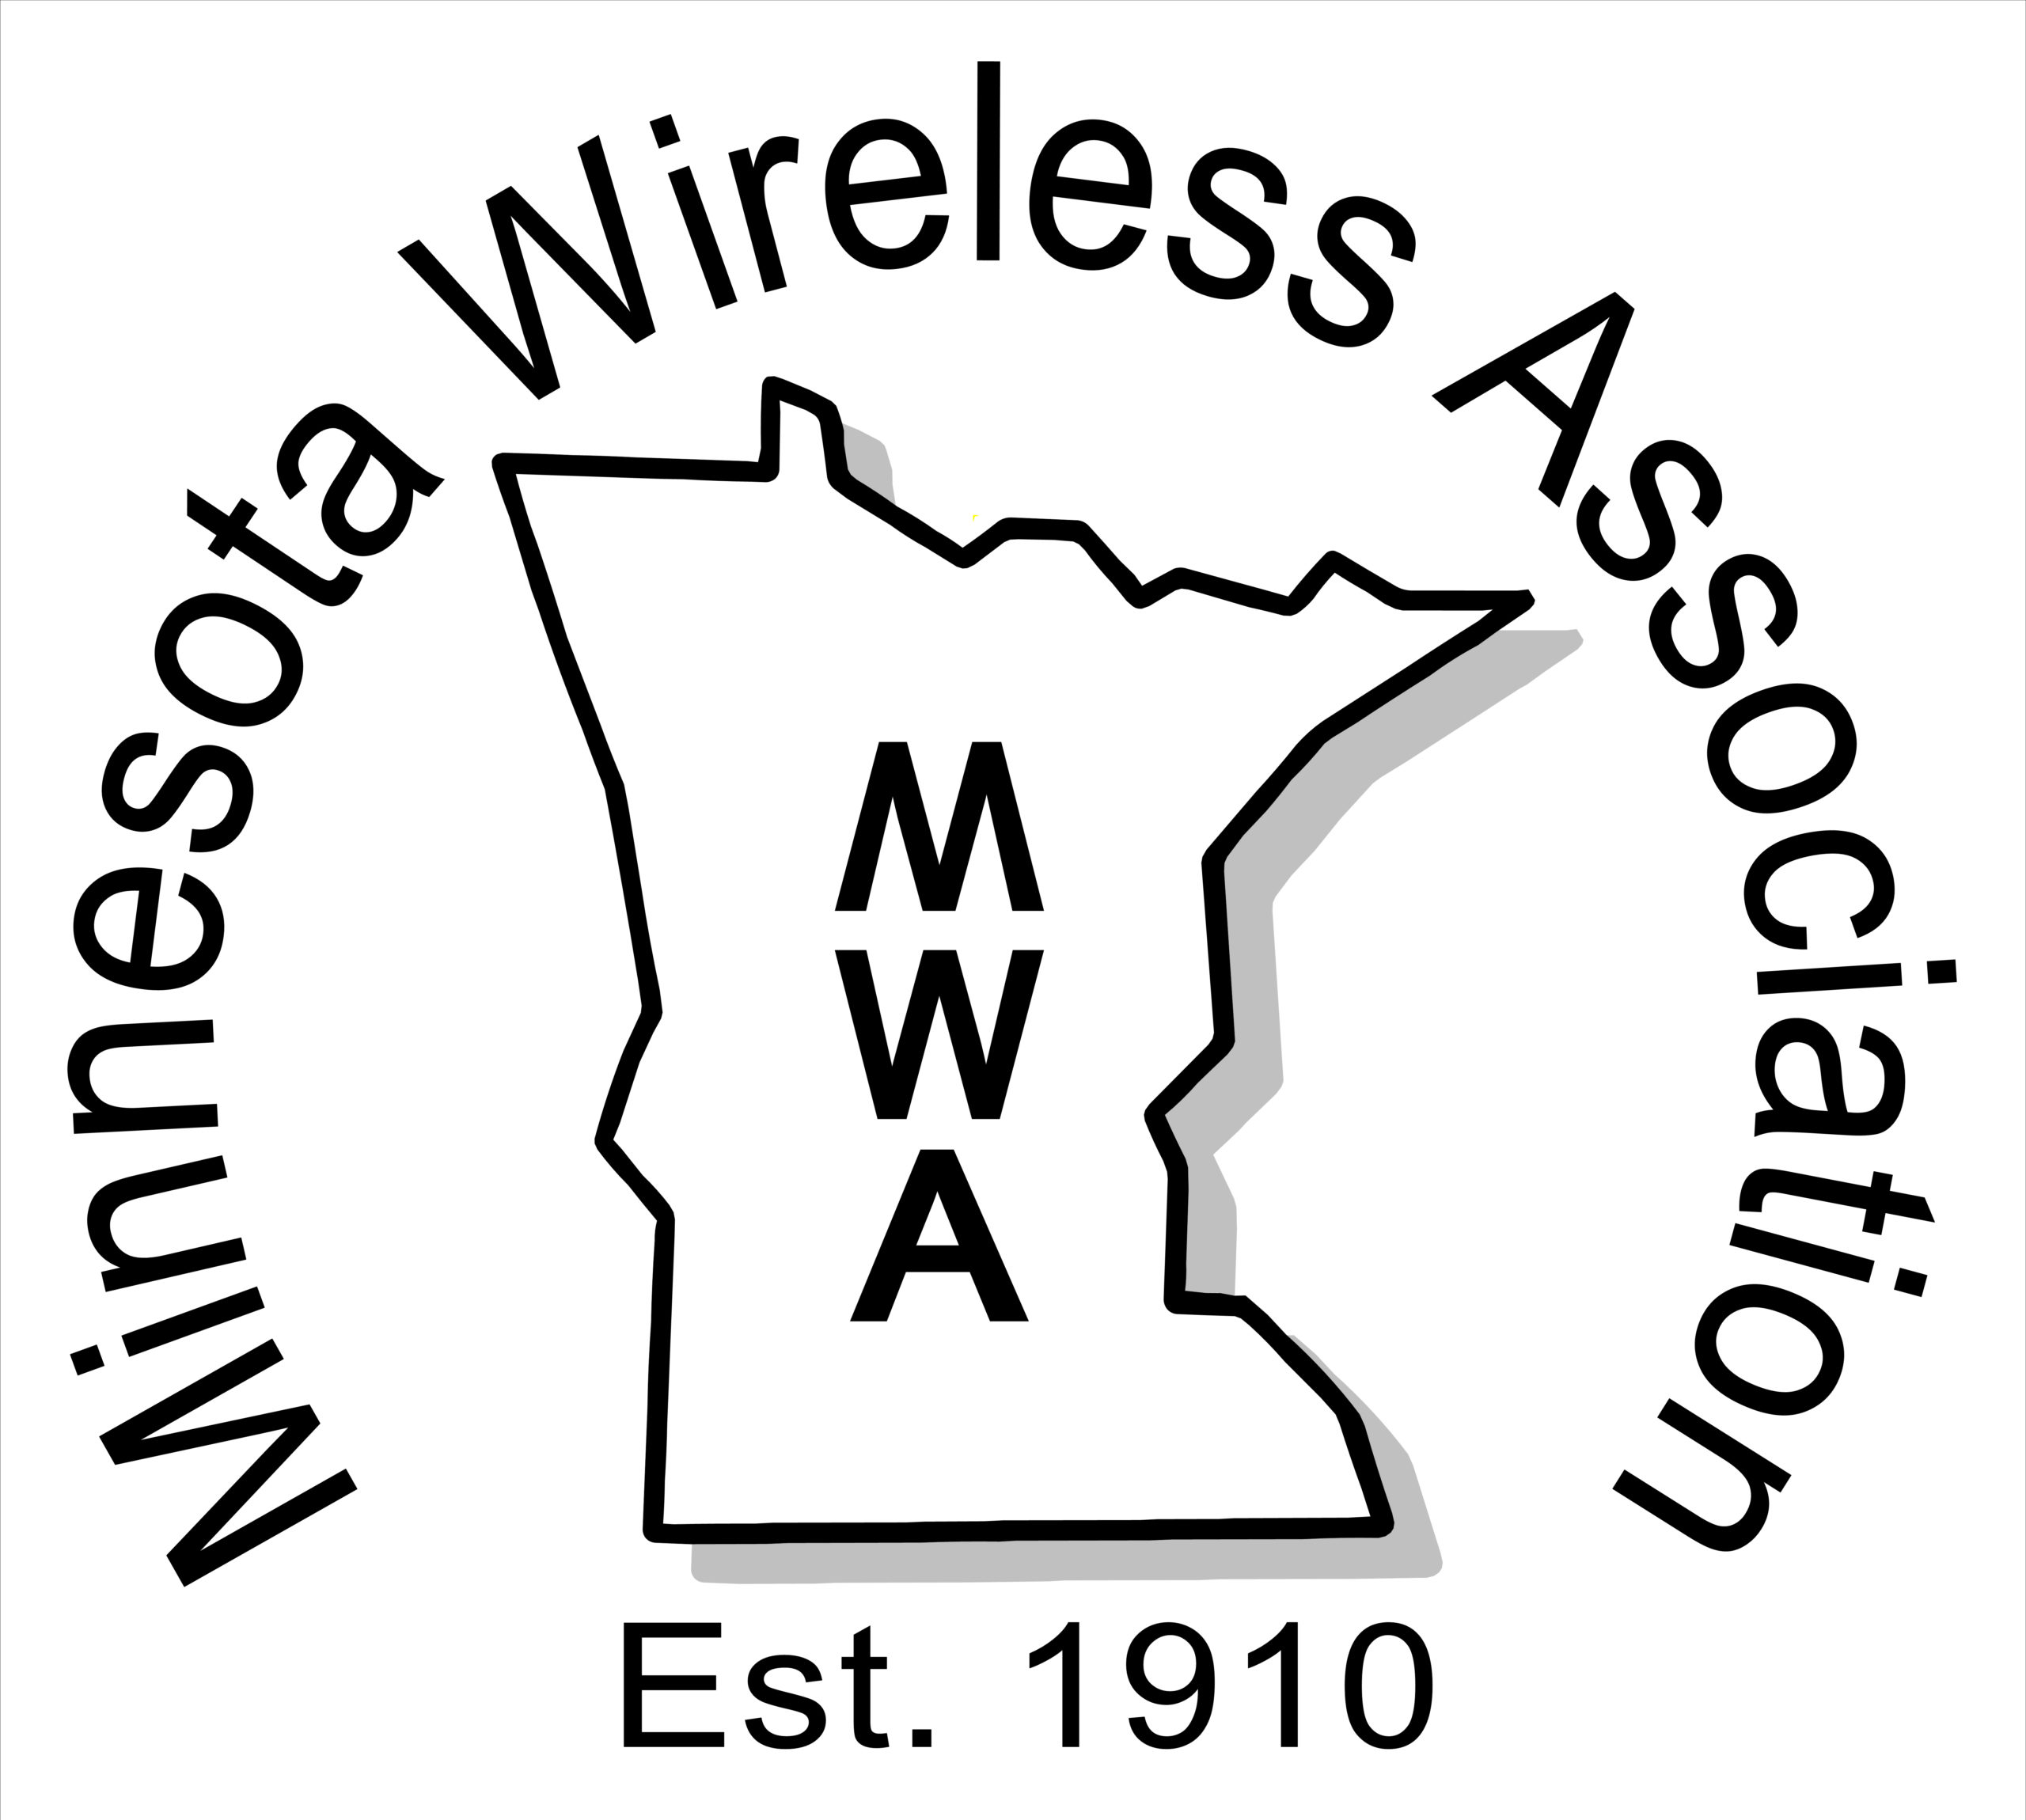 Minnesota Wireless Association